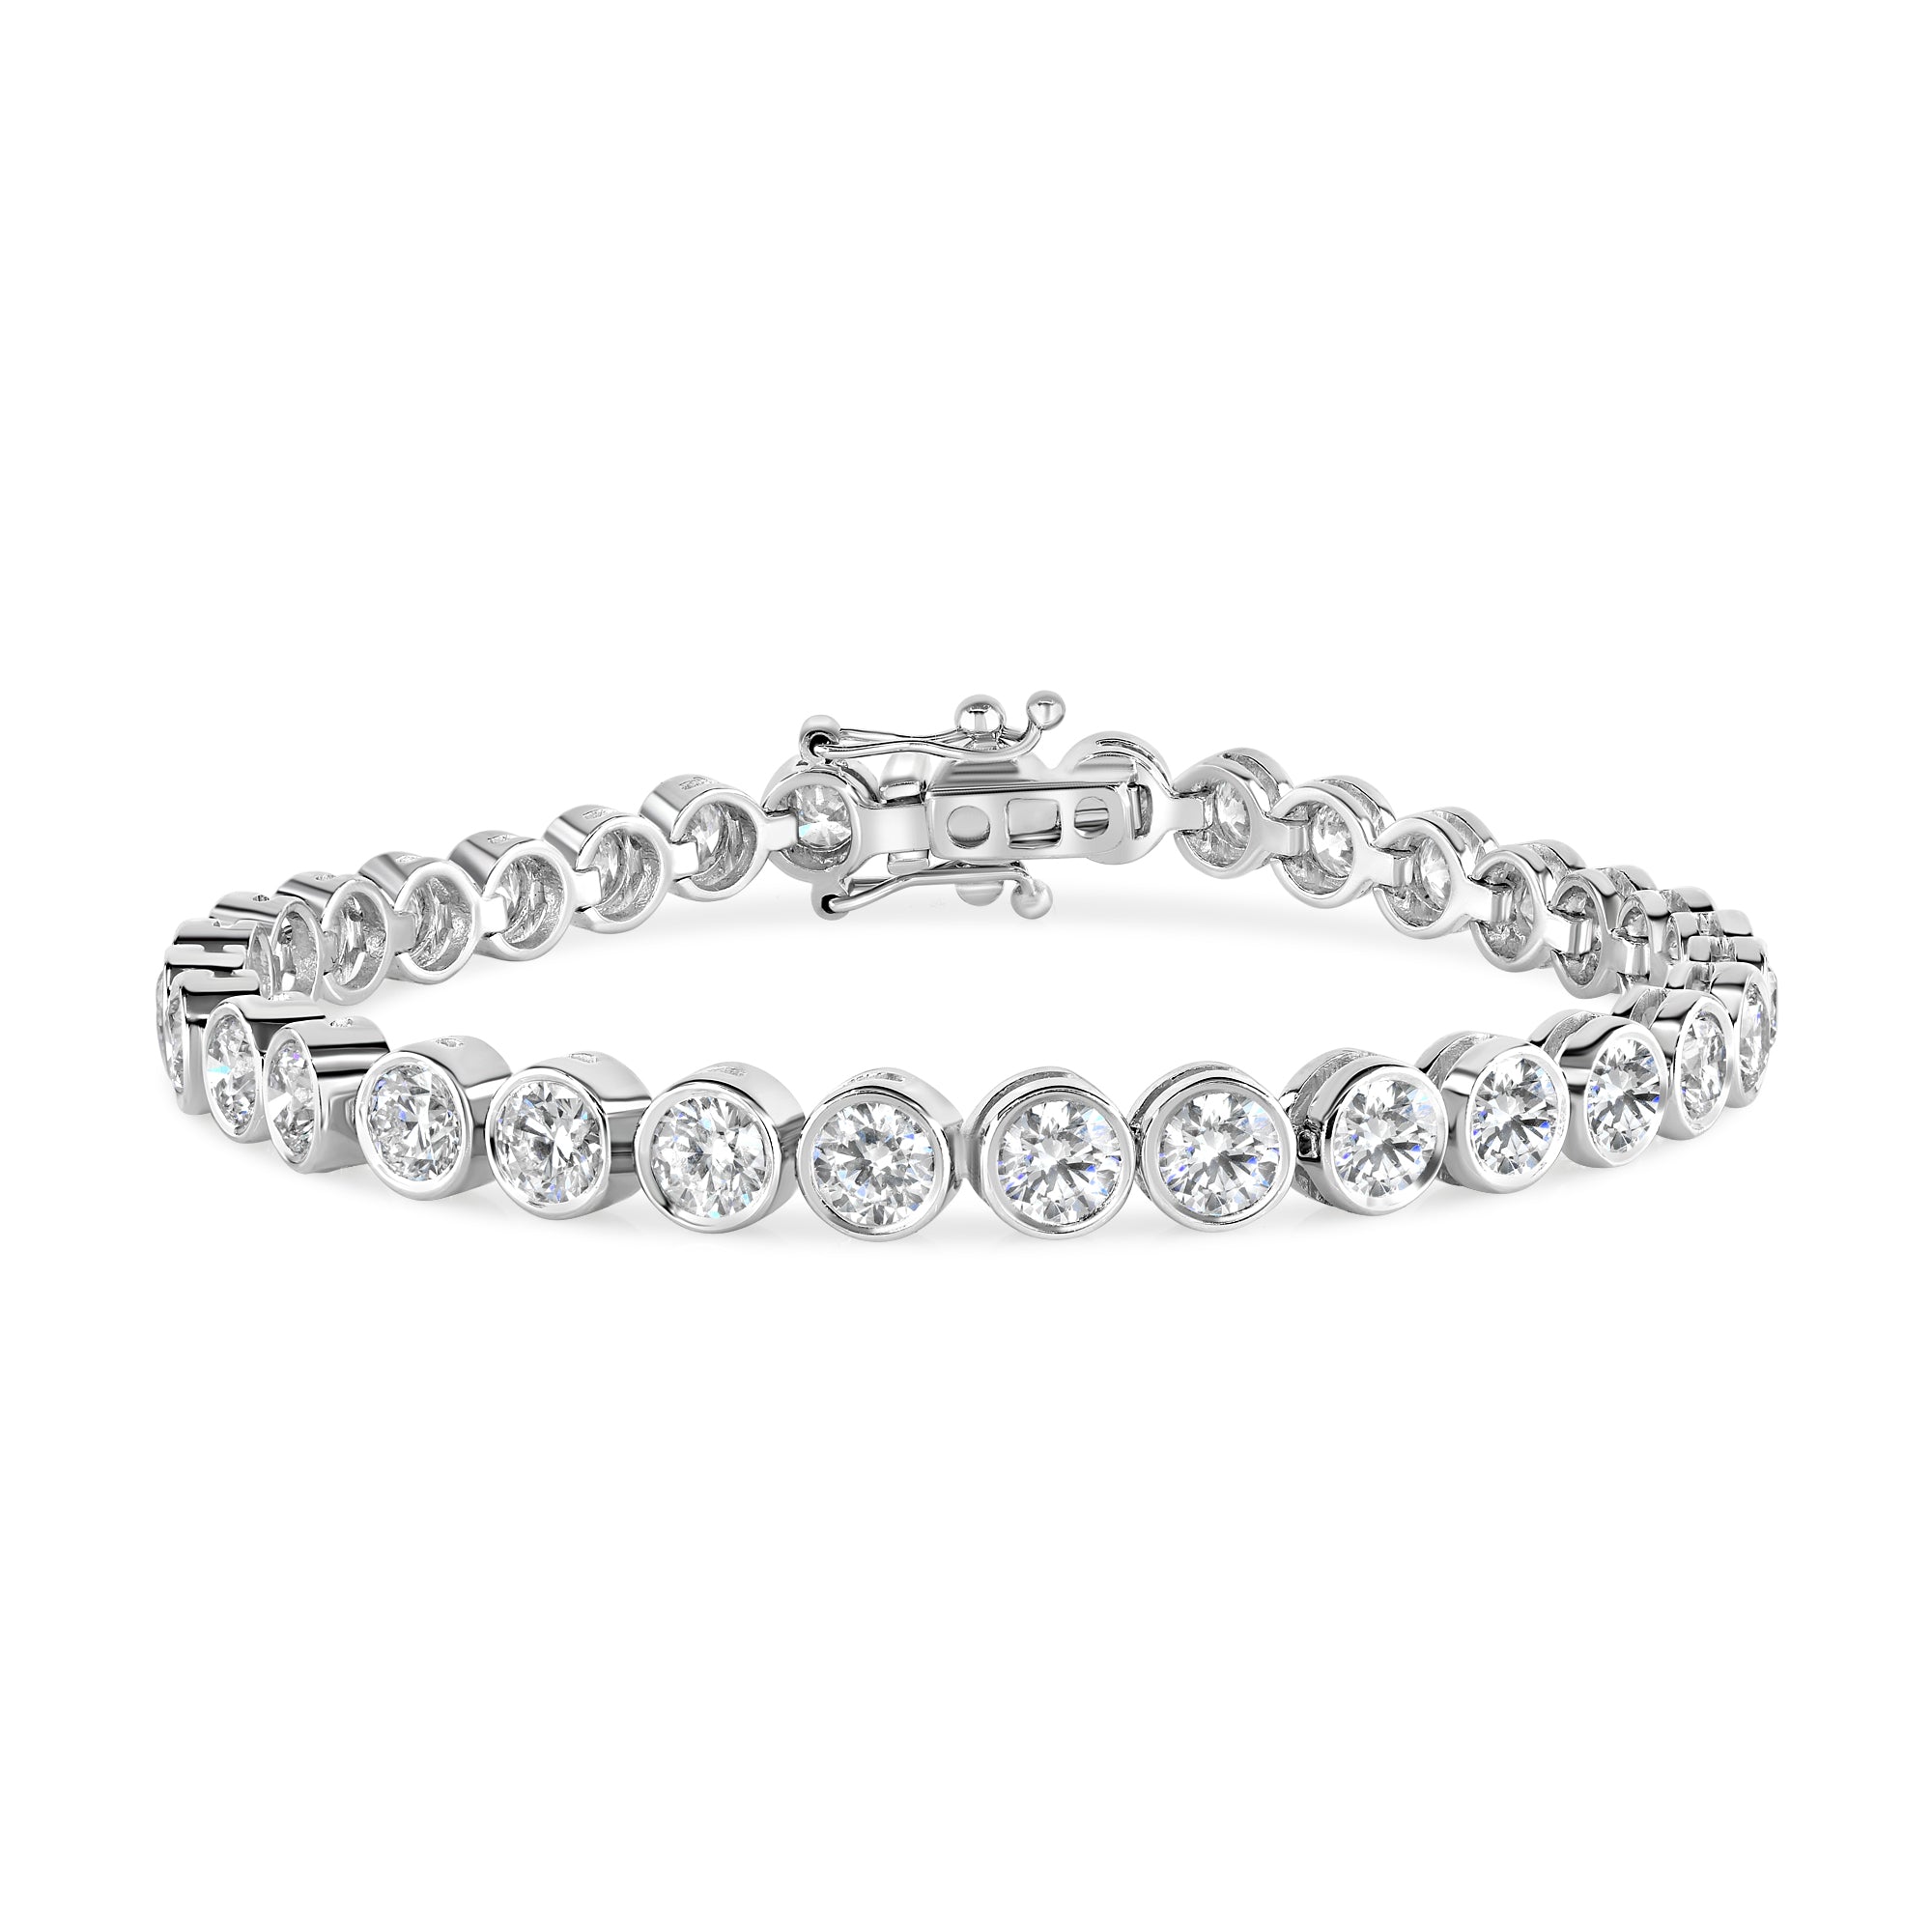 3.01ct round brilliant cut diamond tennis bracelet, 18kt white gold, G/H colour, SI clarity